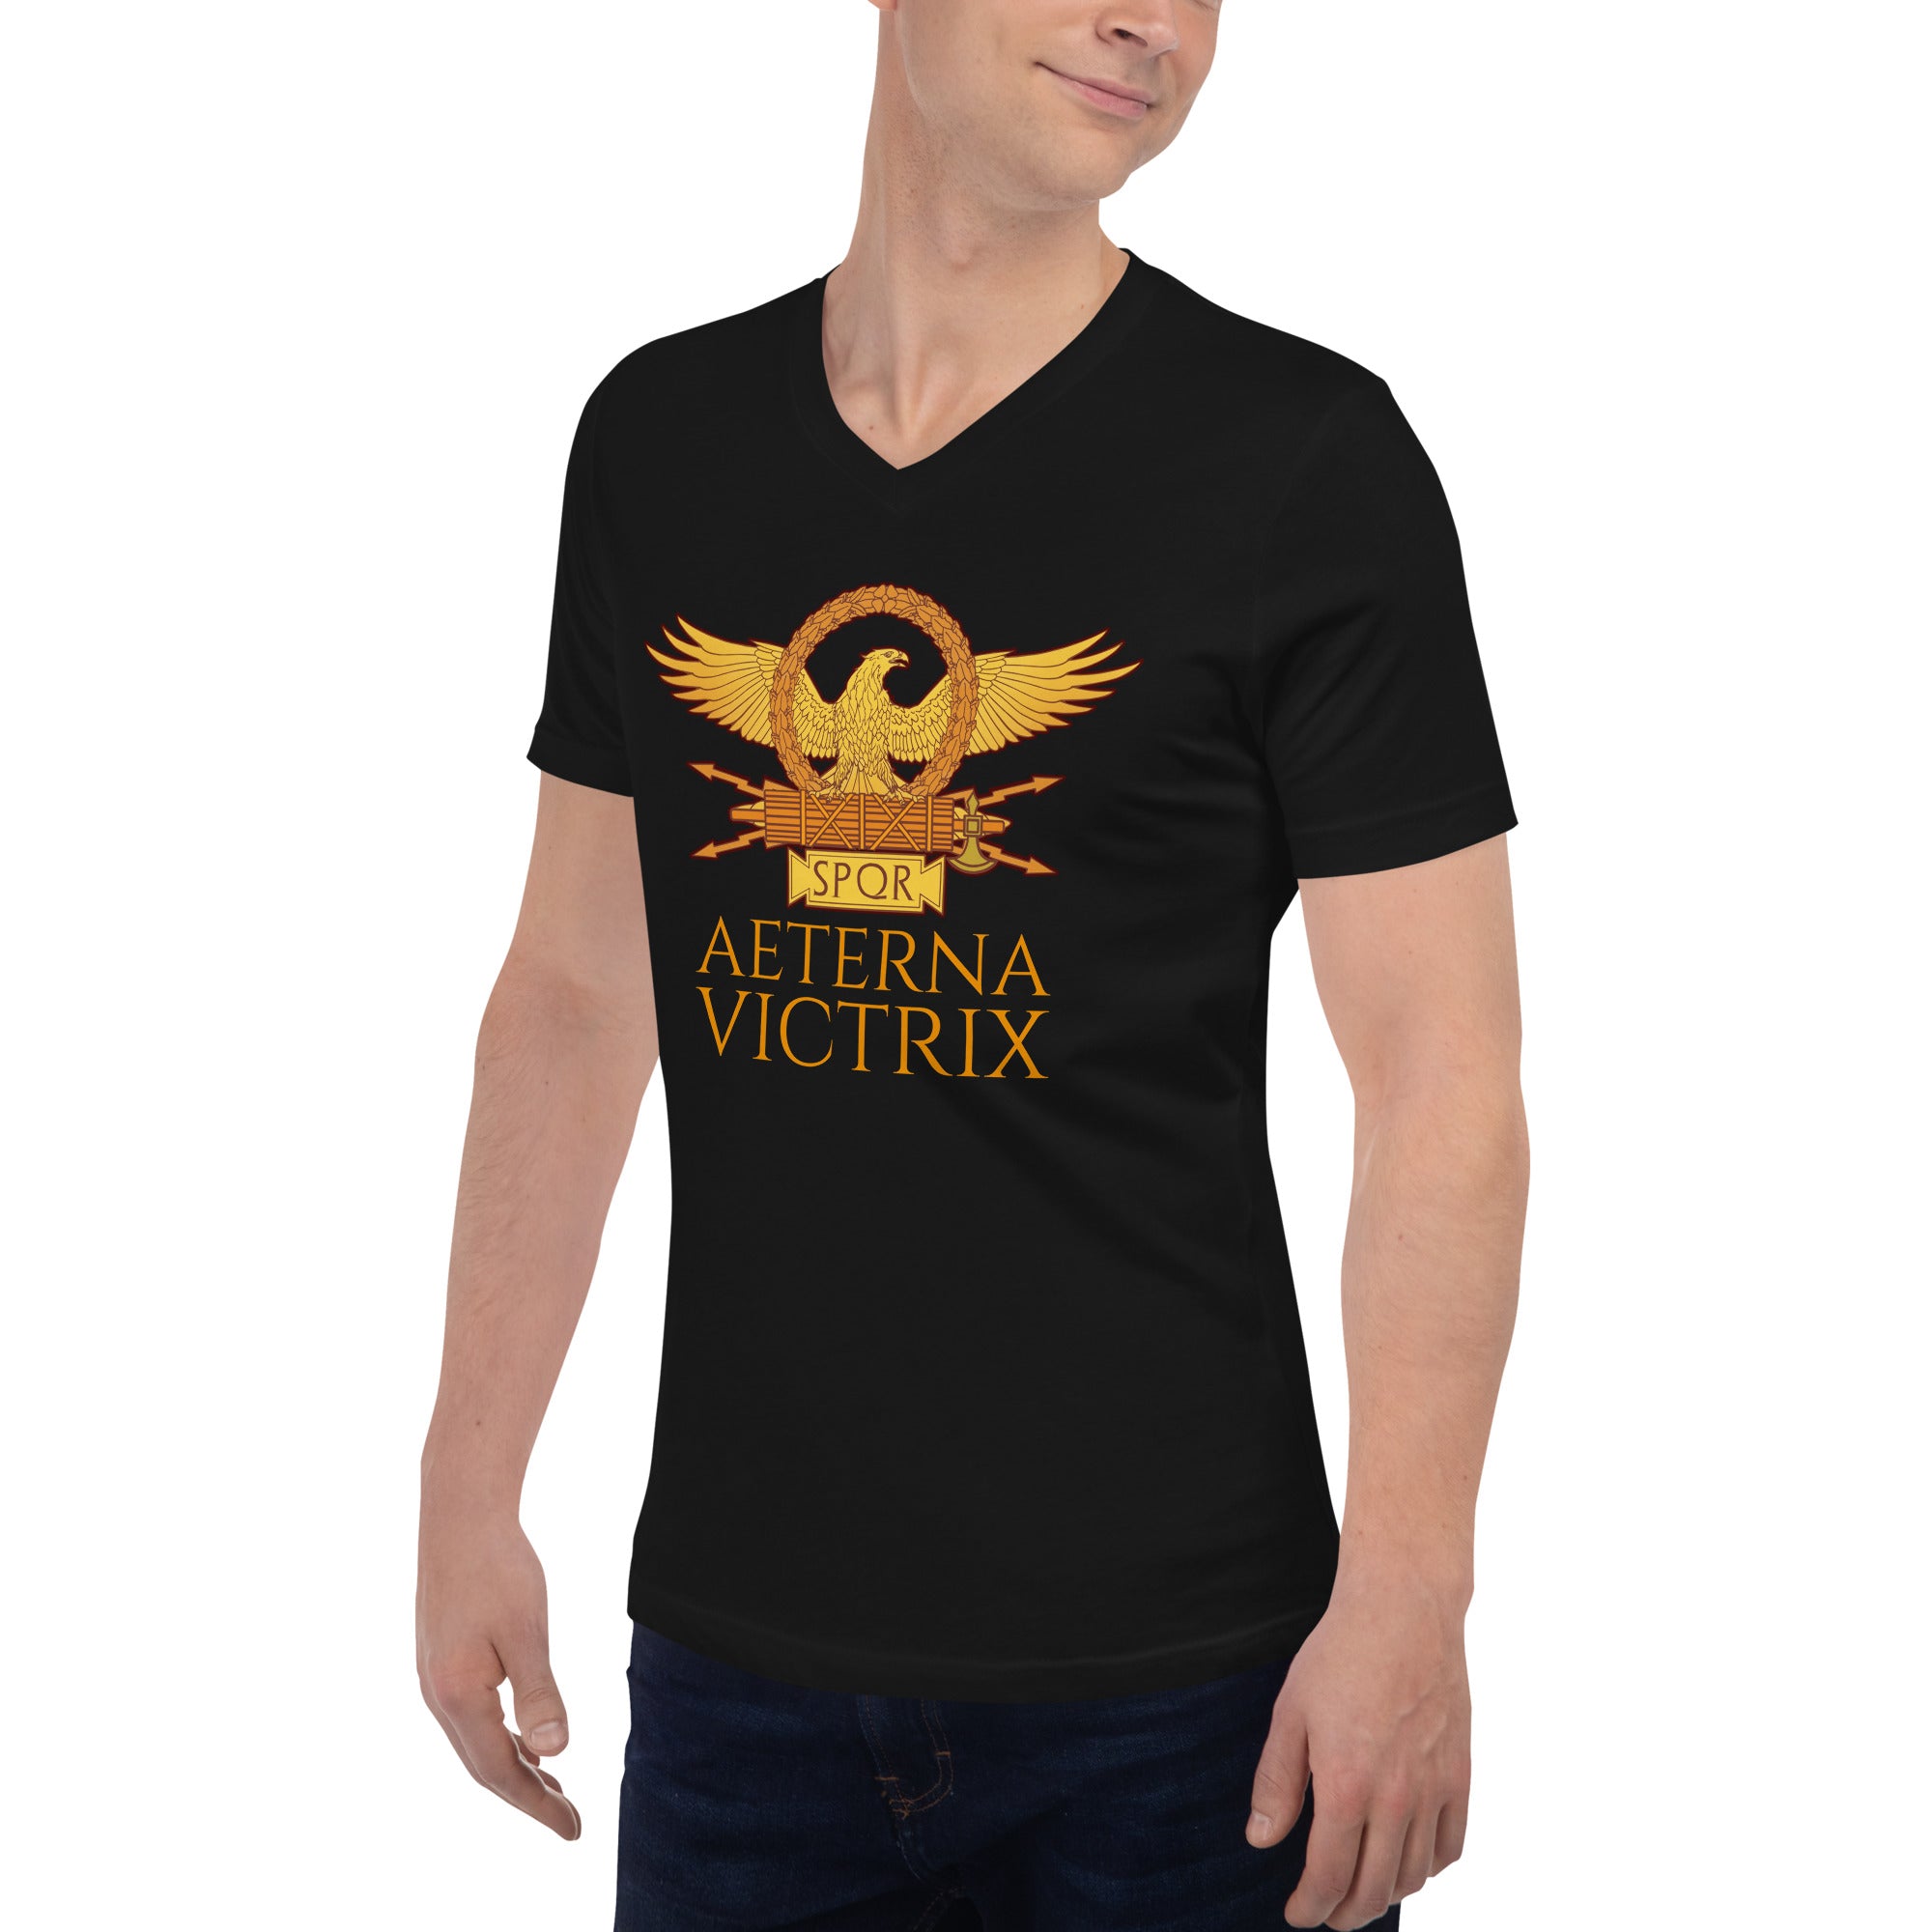 Aeterna Victrix - Eternal Victory - Ancient Rome - Unisex Short Sleeve V-Neck T-Shirt